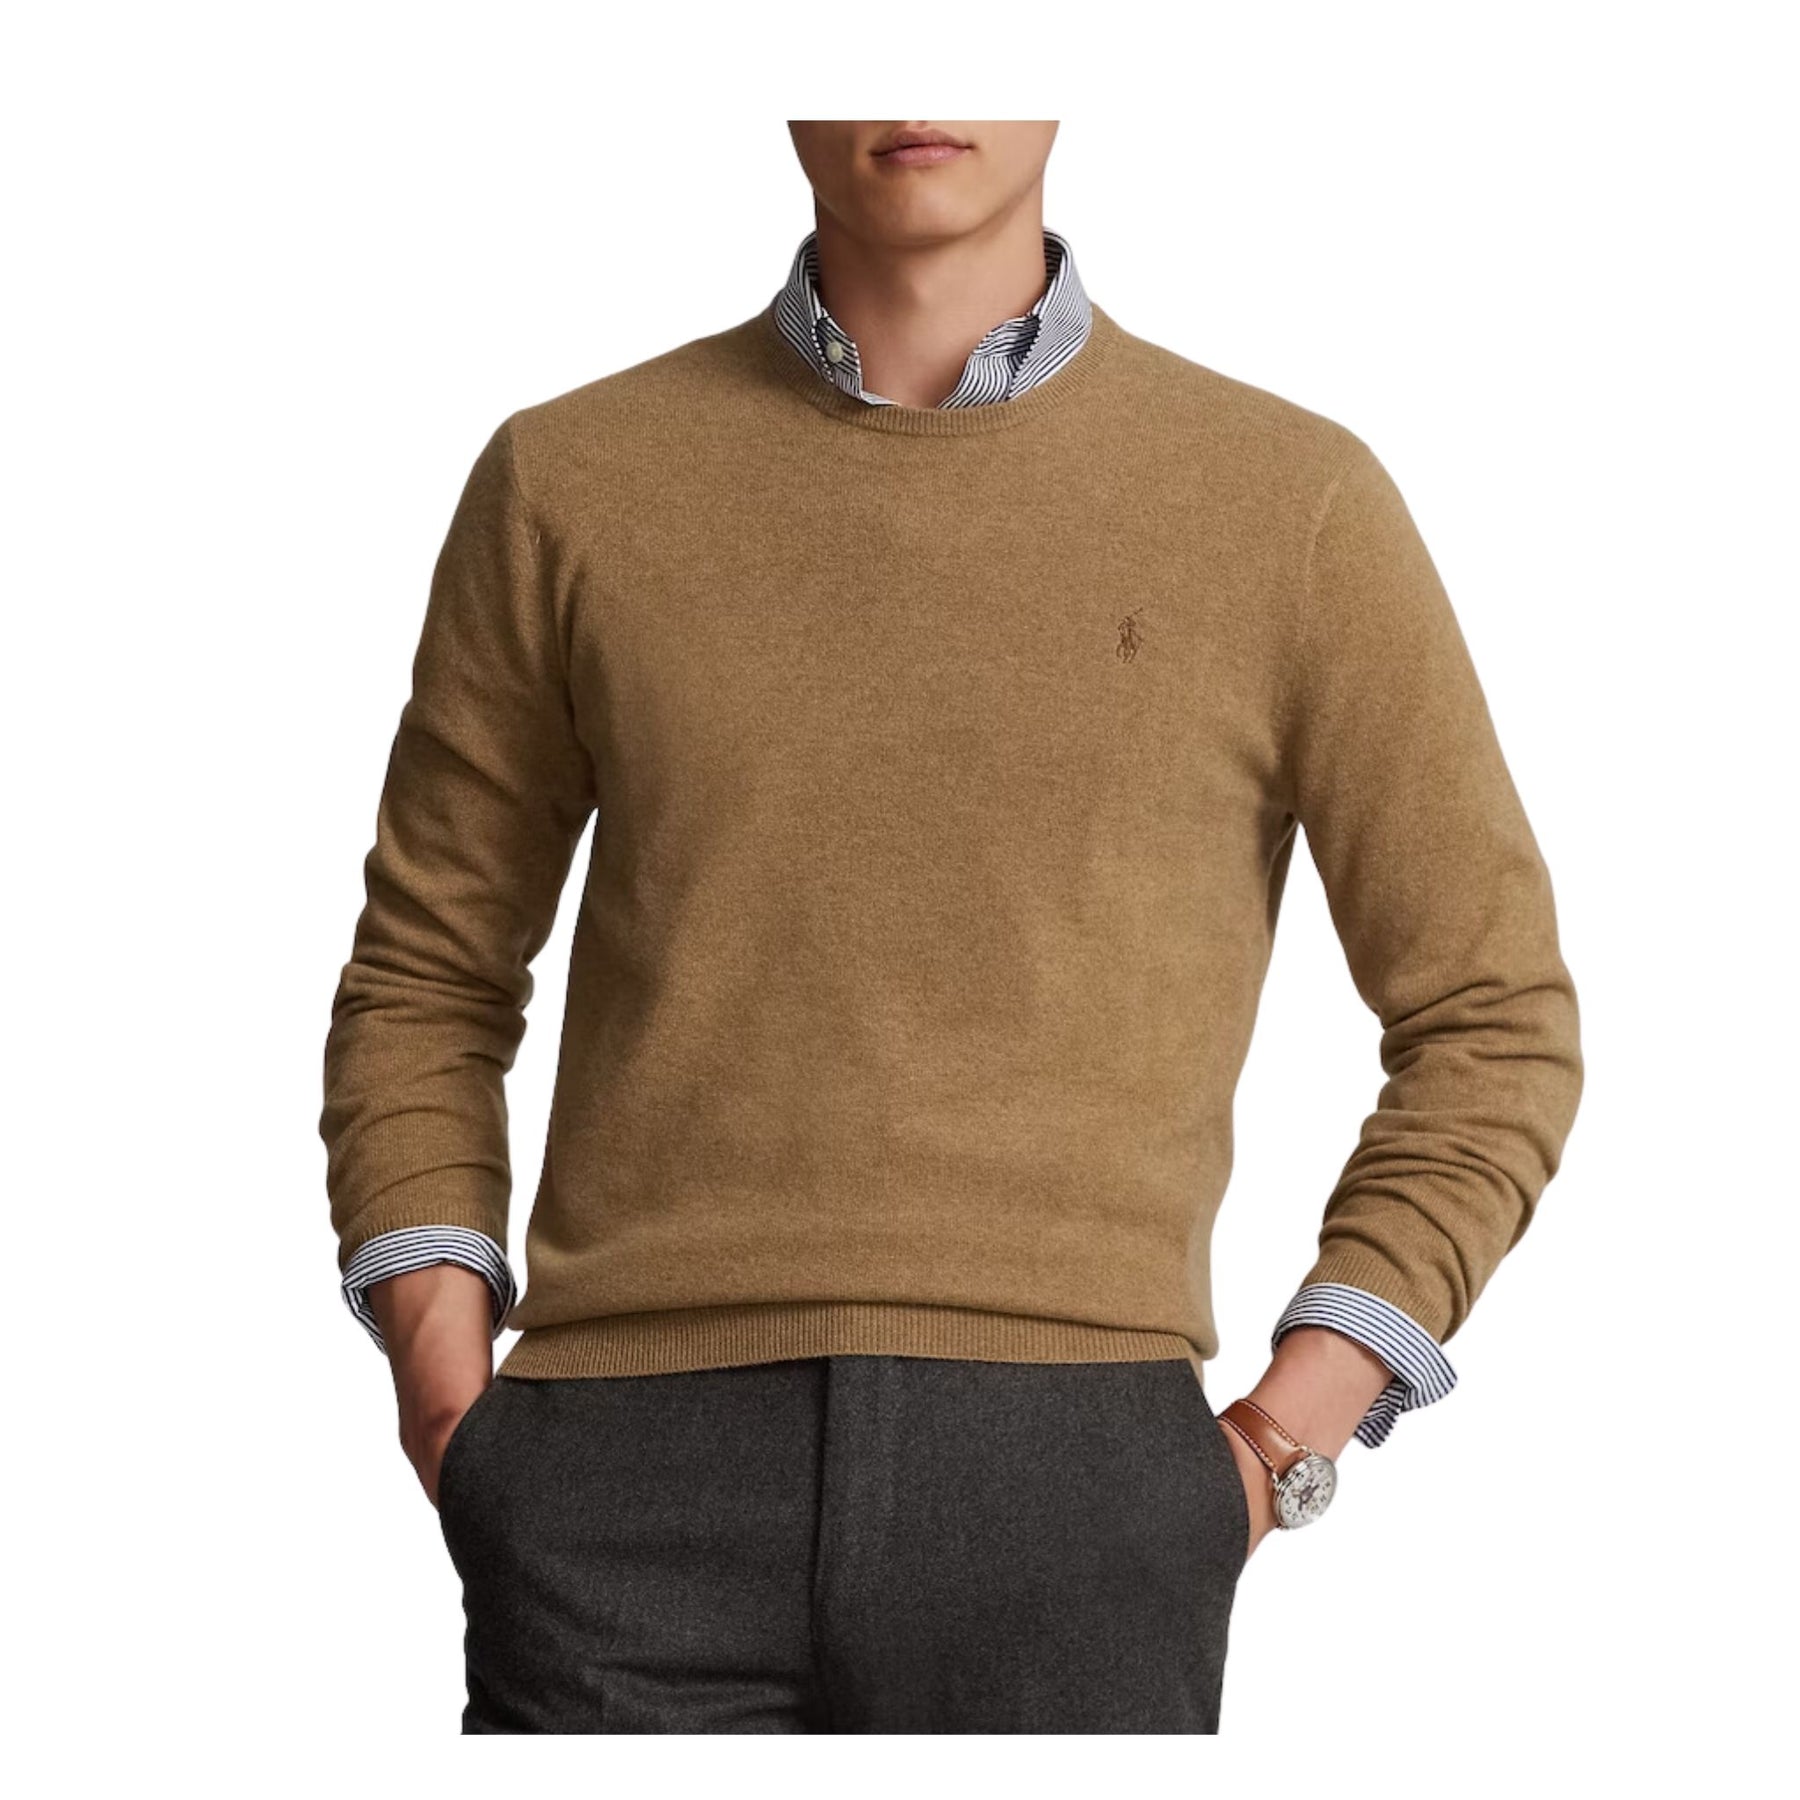 fashion gift ideas: ralph lauren men's sweater